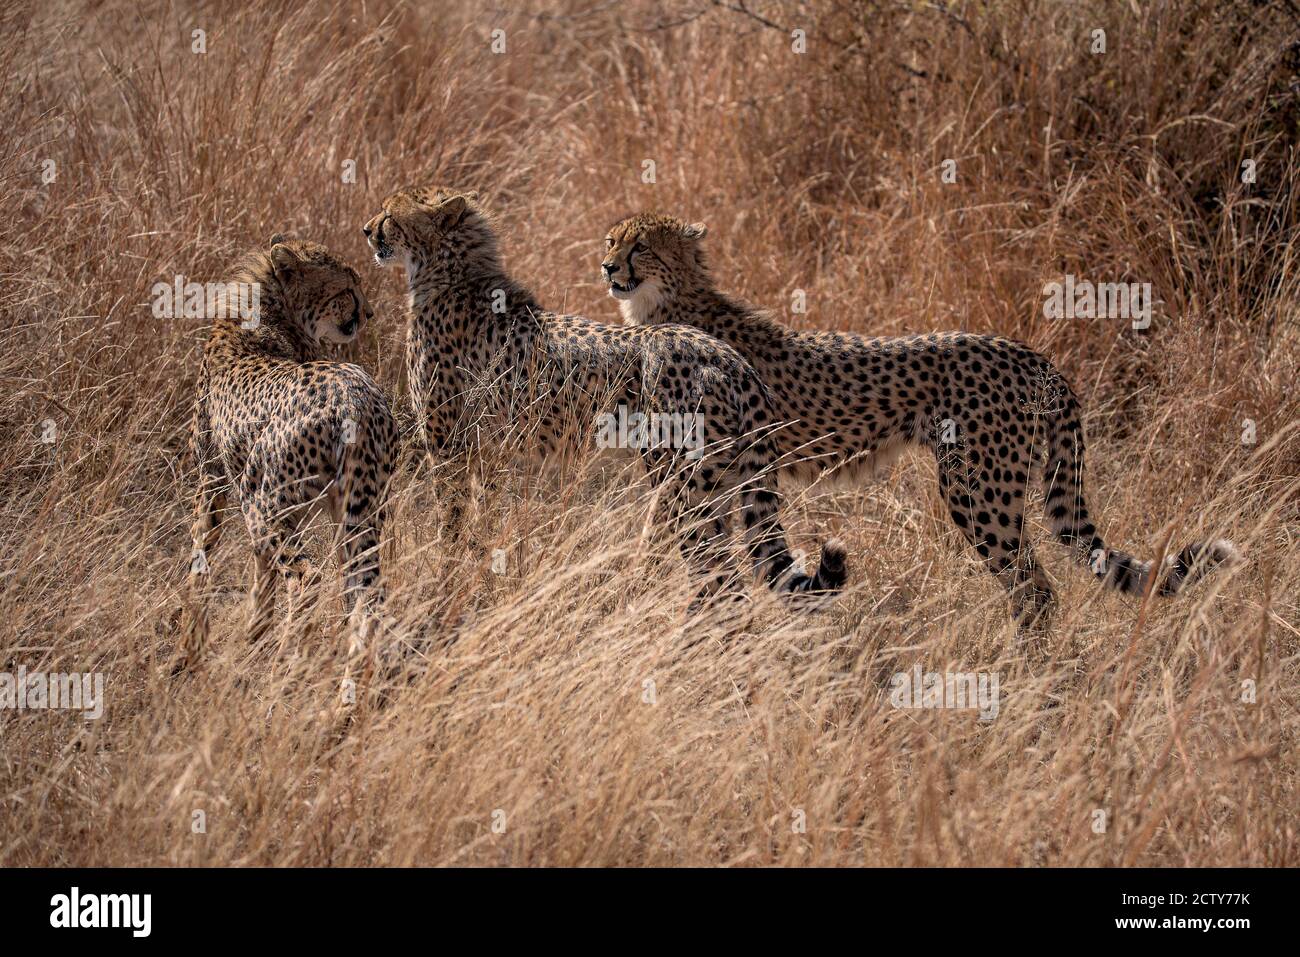 Three Cheetahs on the hunt Stock Photo